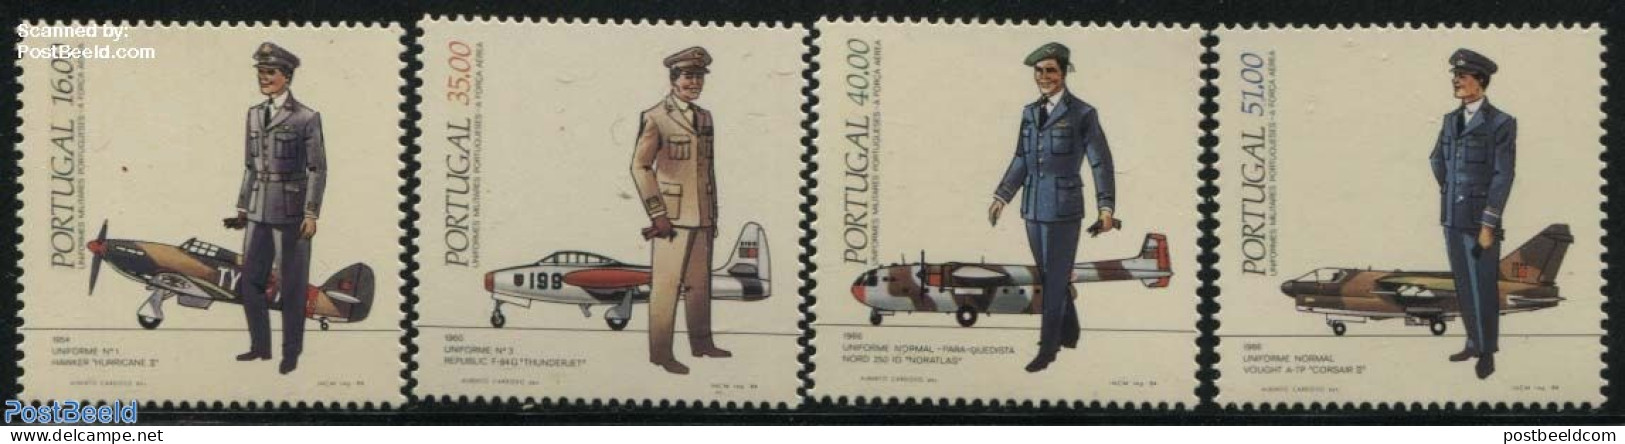 Portugal 1984 Uniforms & Aeroplanes 4v, Mint NH, Transport - Various - Aircraft & Aviation - Uniforms - Ongebruikt